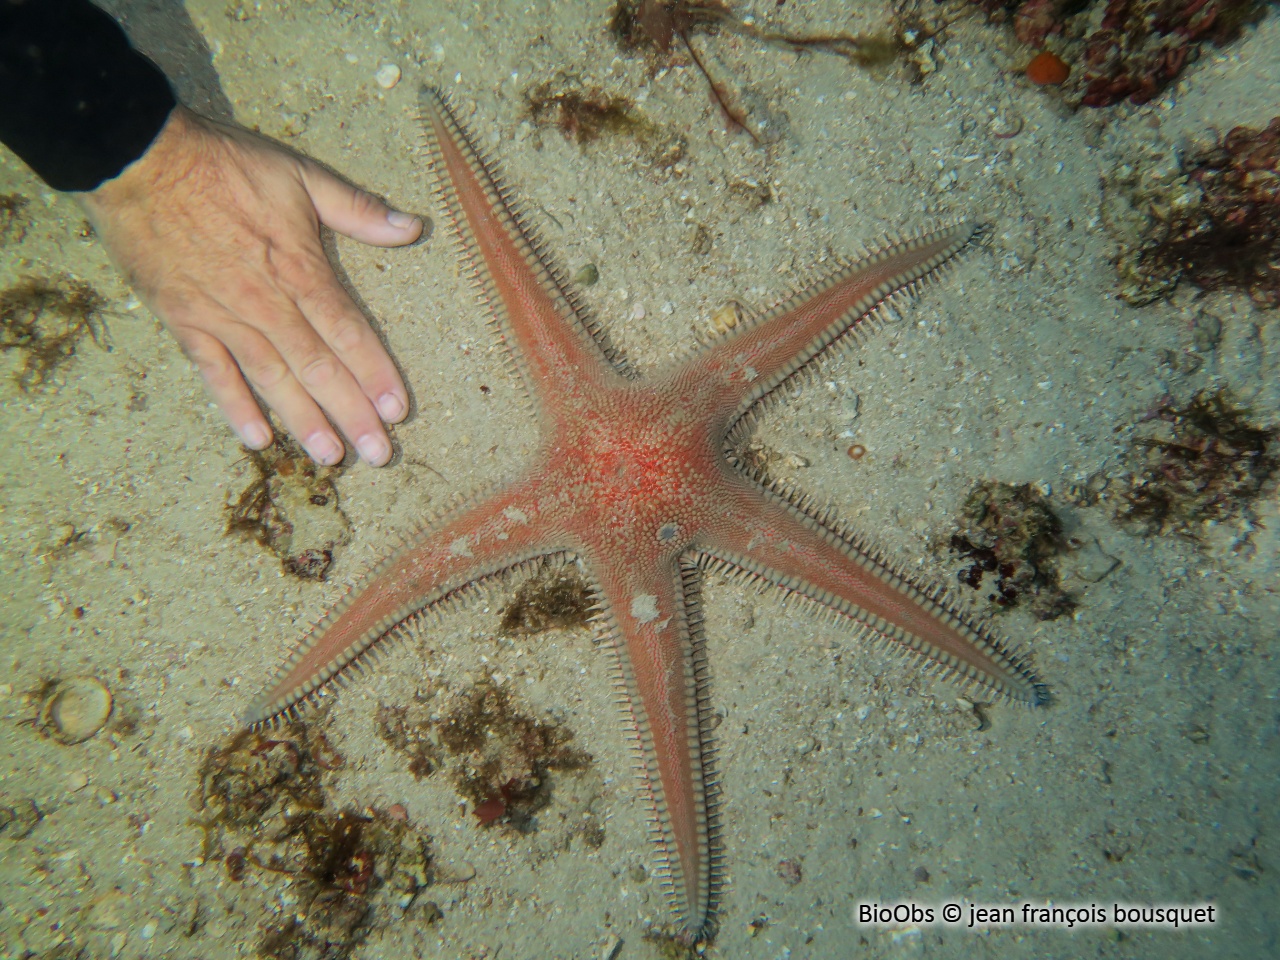 Grande étoile-peigne - Astropecten aranciacus - jean françois bousquet - BioObs